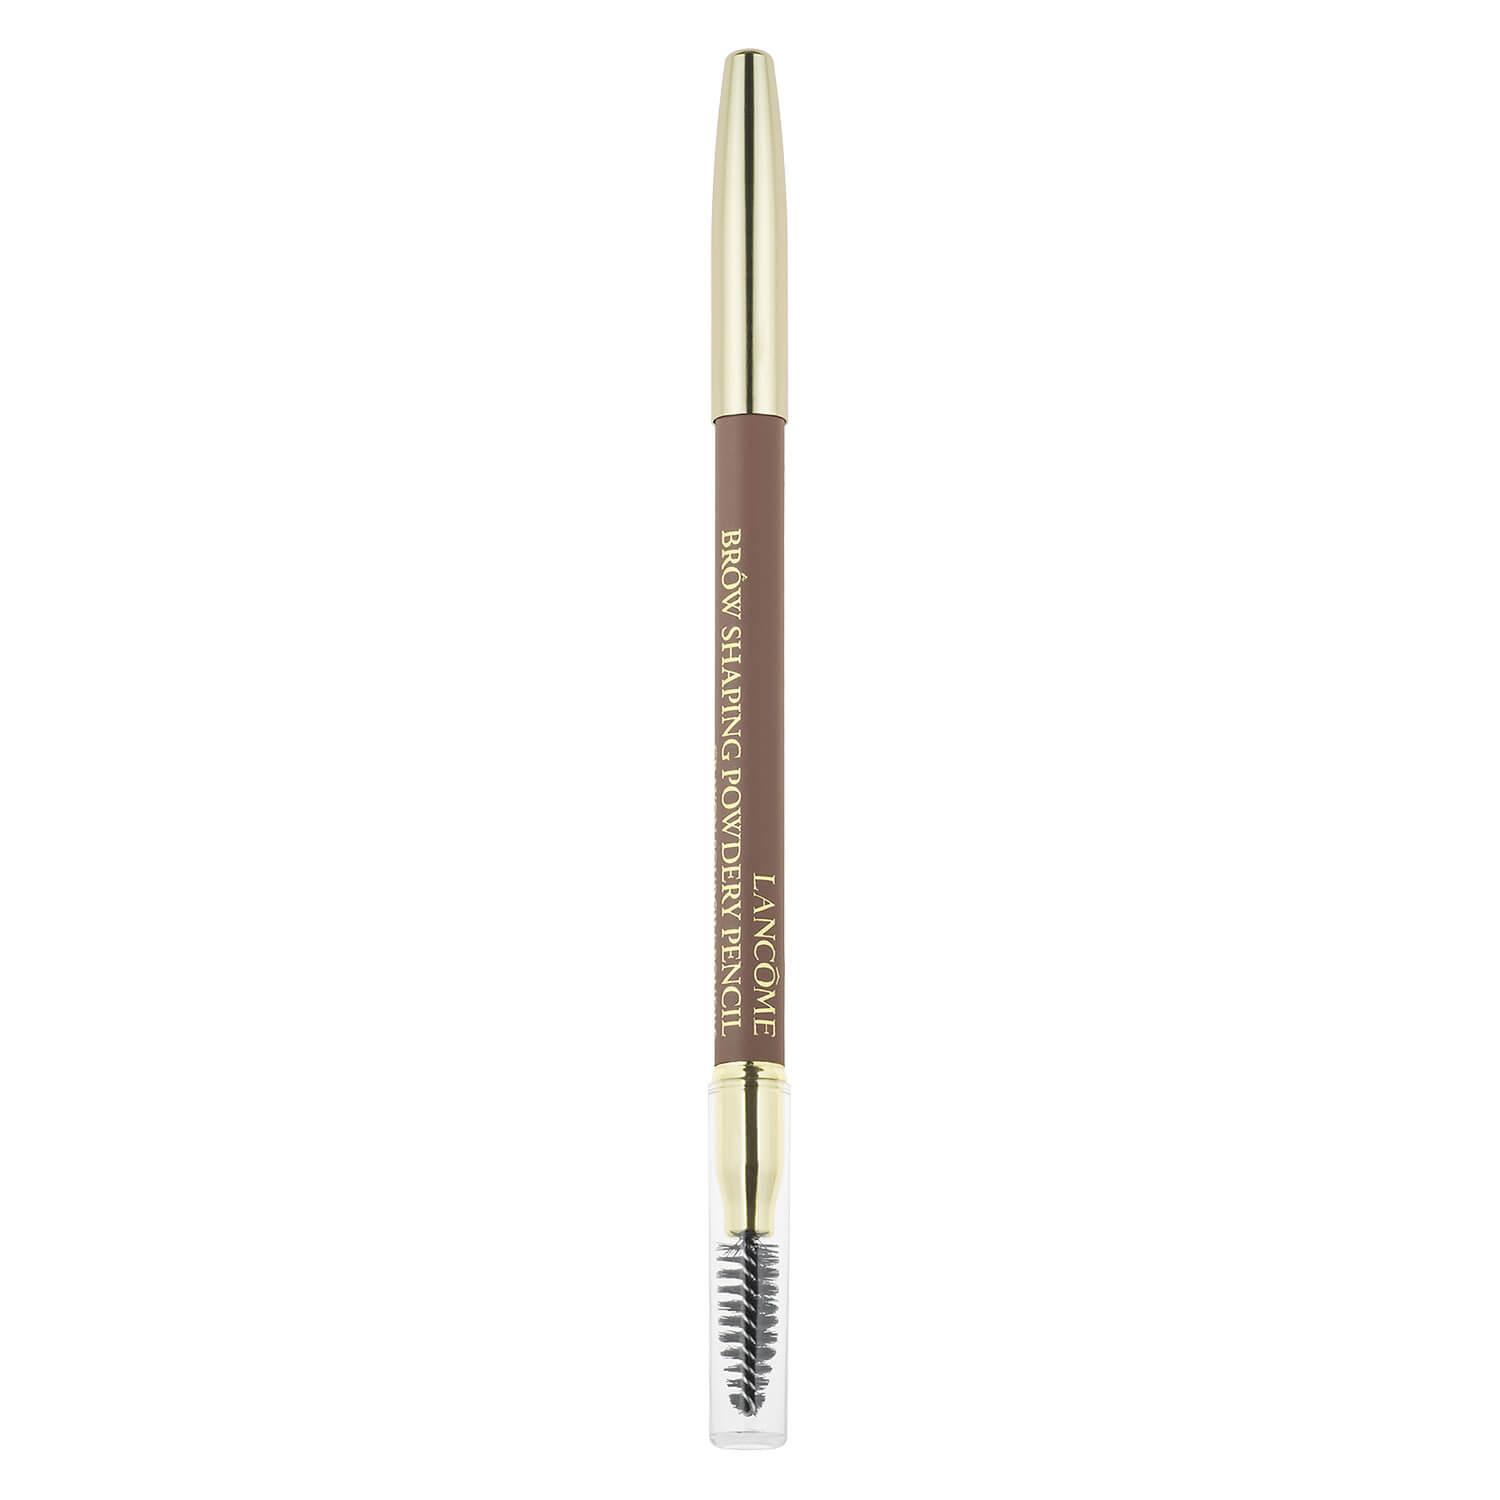 Lancôme Brows - Brow Shaping Powdery Pencil 02